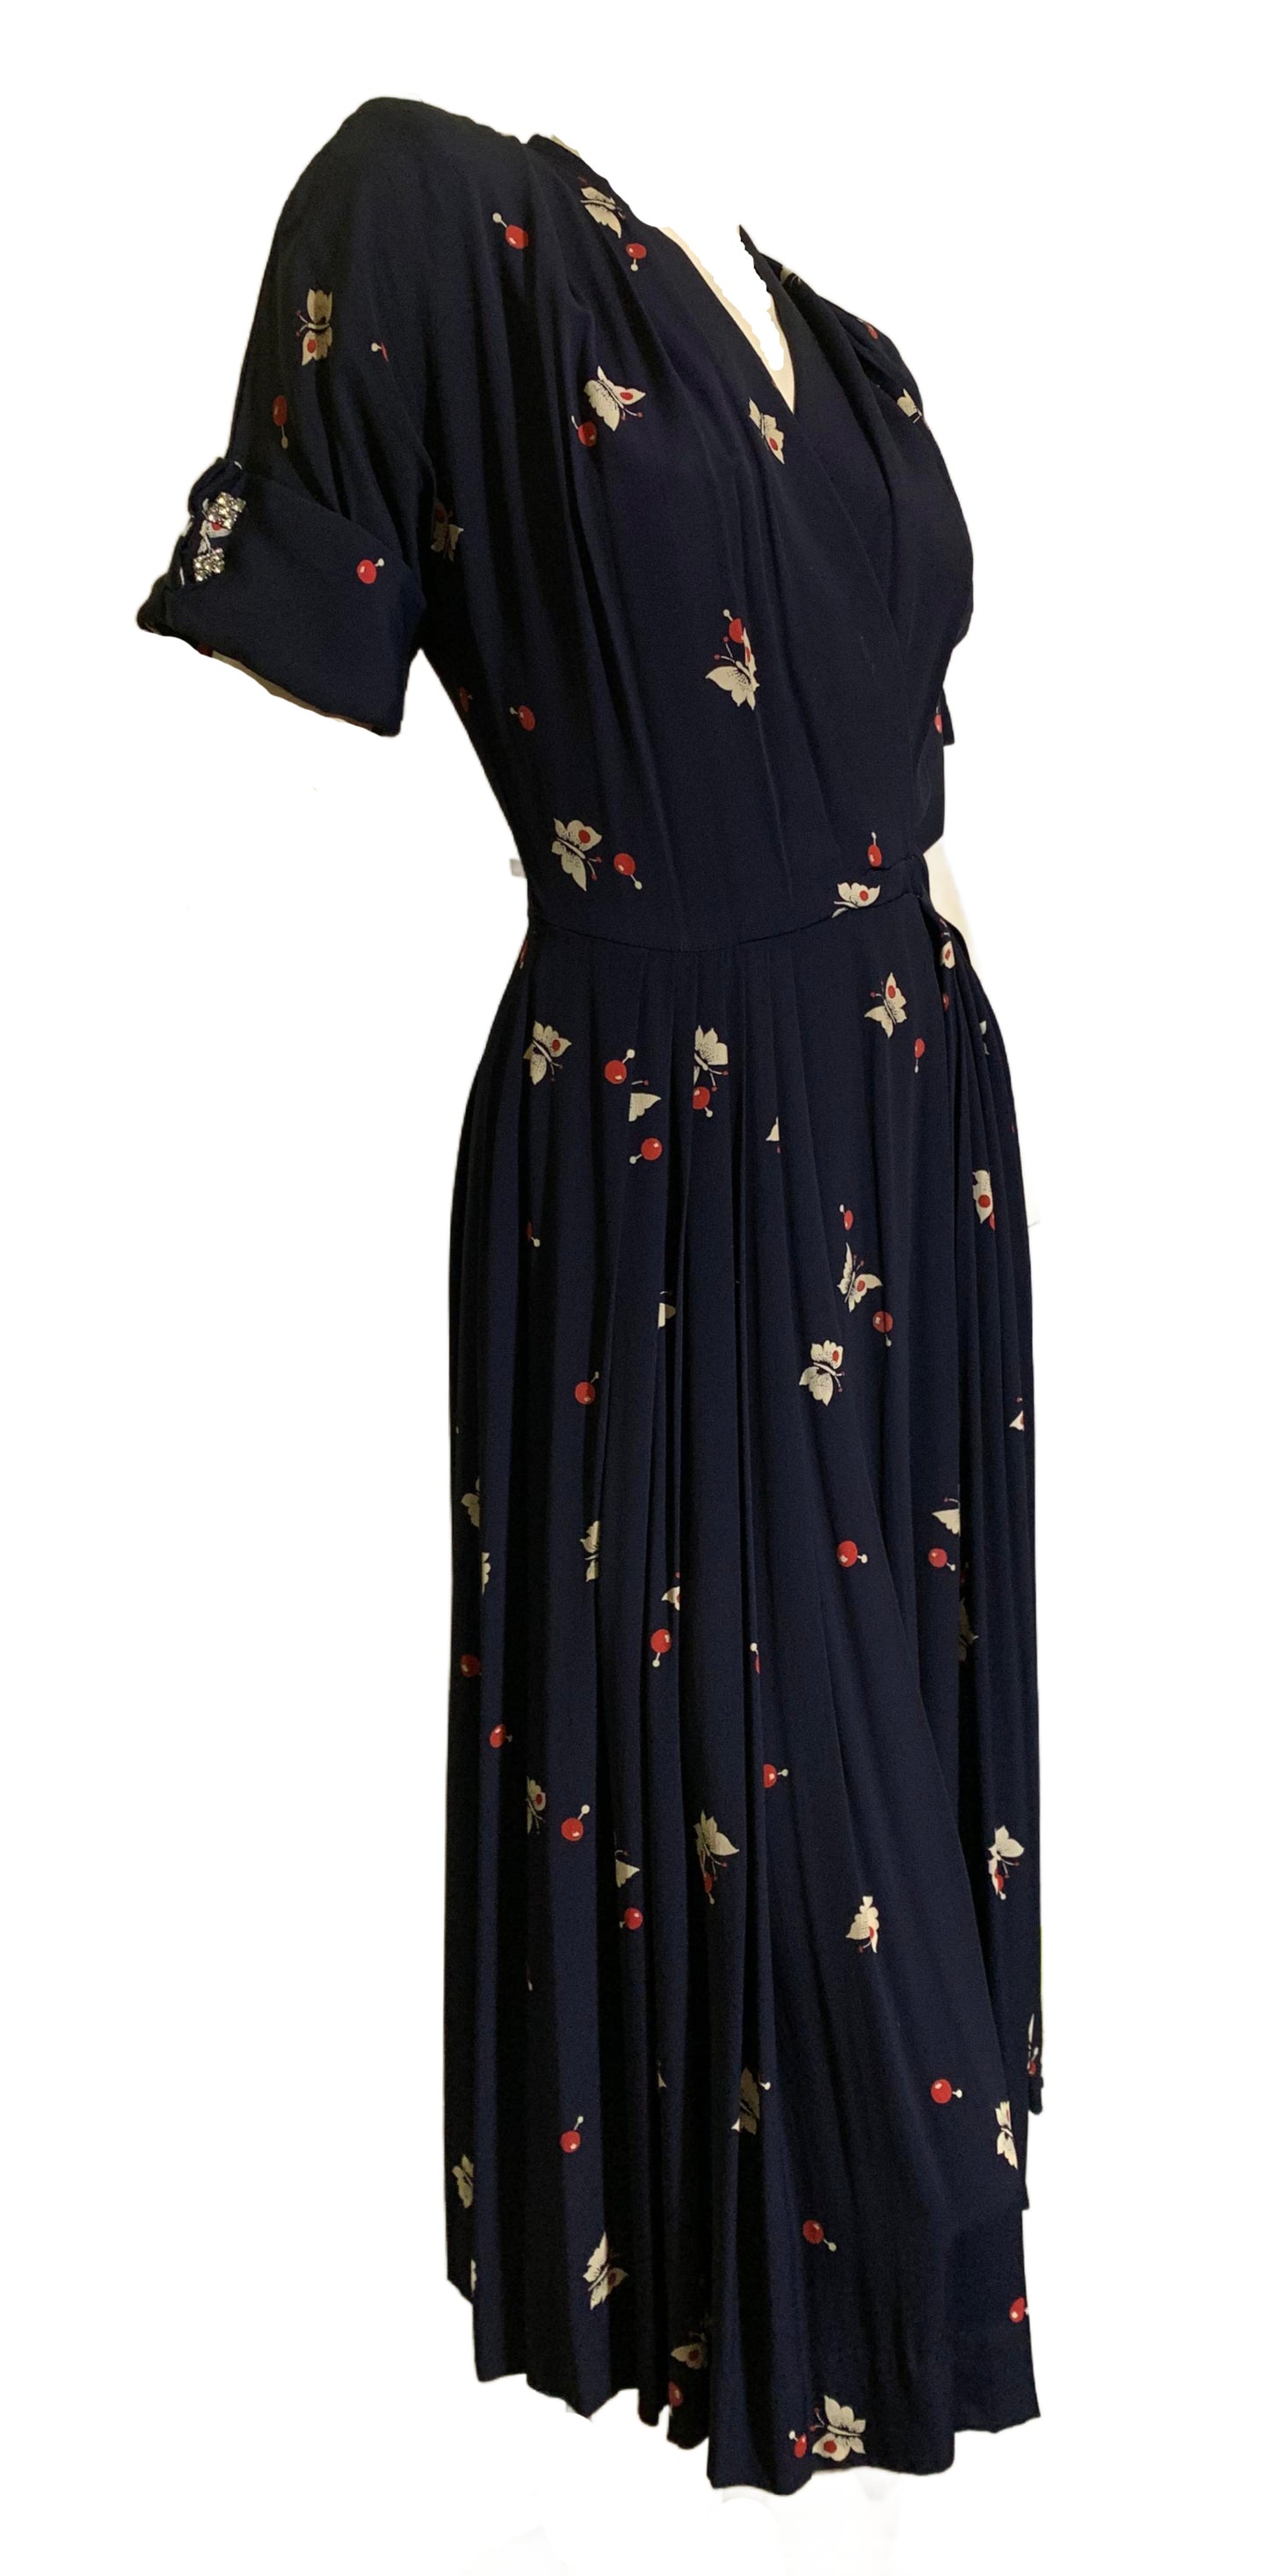 Currants and Butterflies! Deep Blue Rayon Surplice Bodice Dress circa 1940s